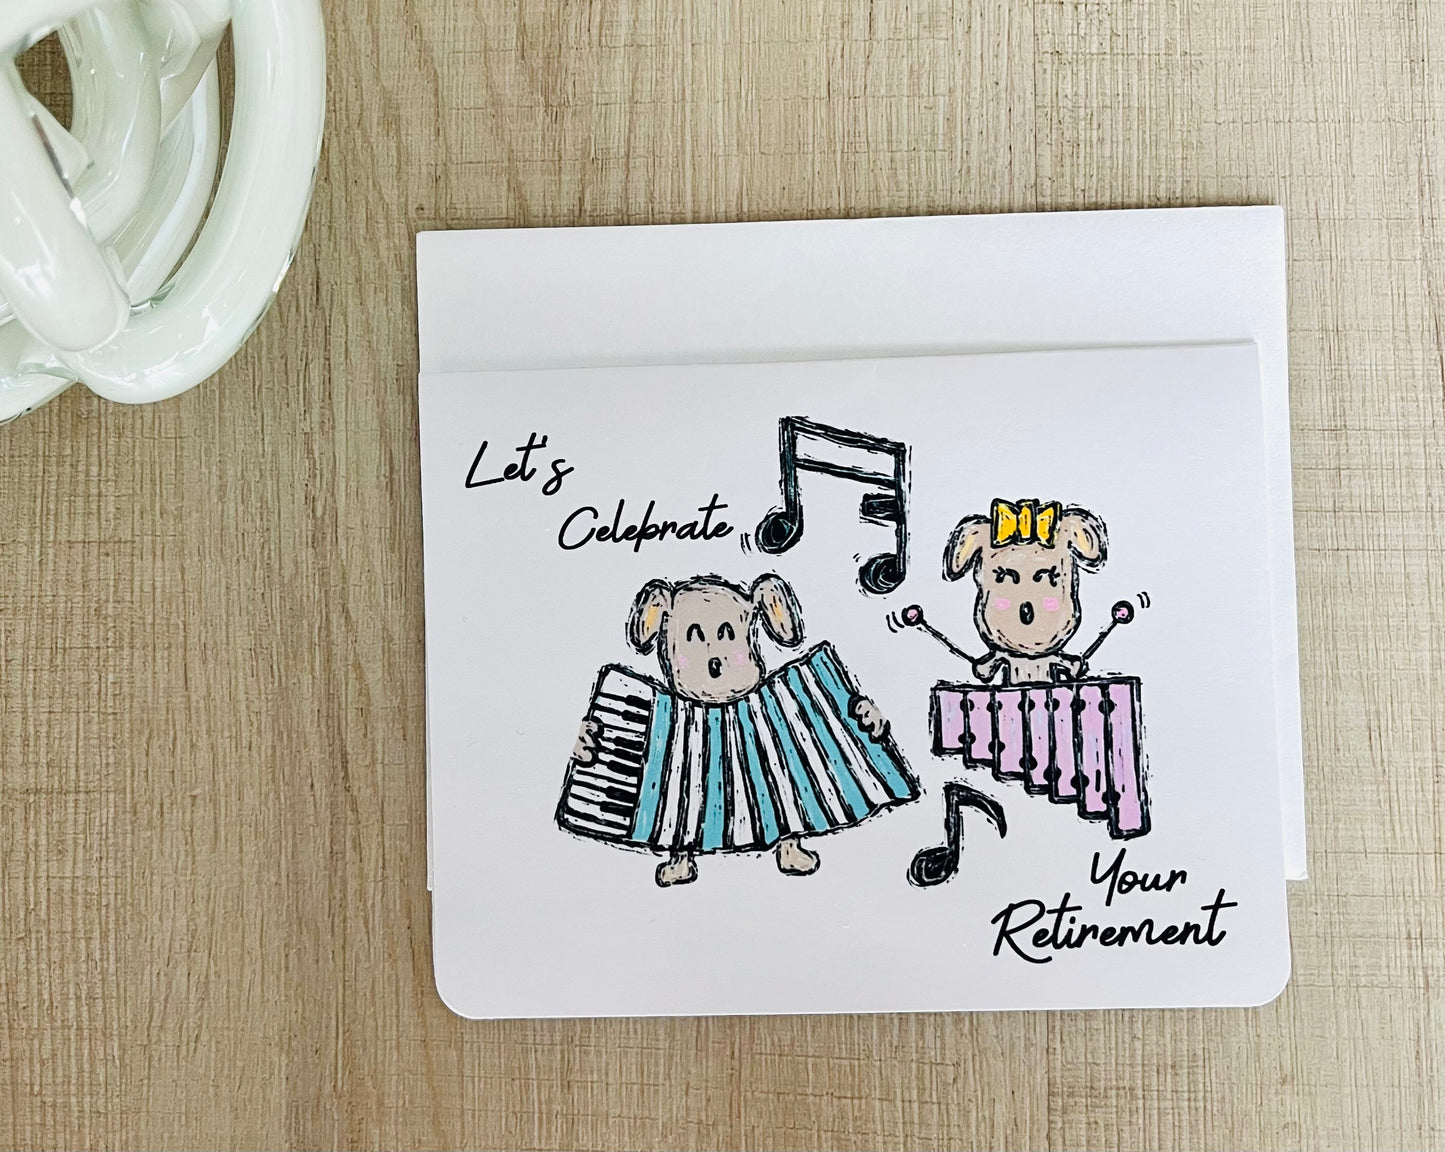 Music Band Handmade Retirement Celebration Greeting Card